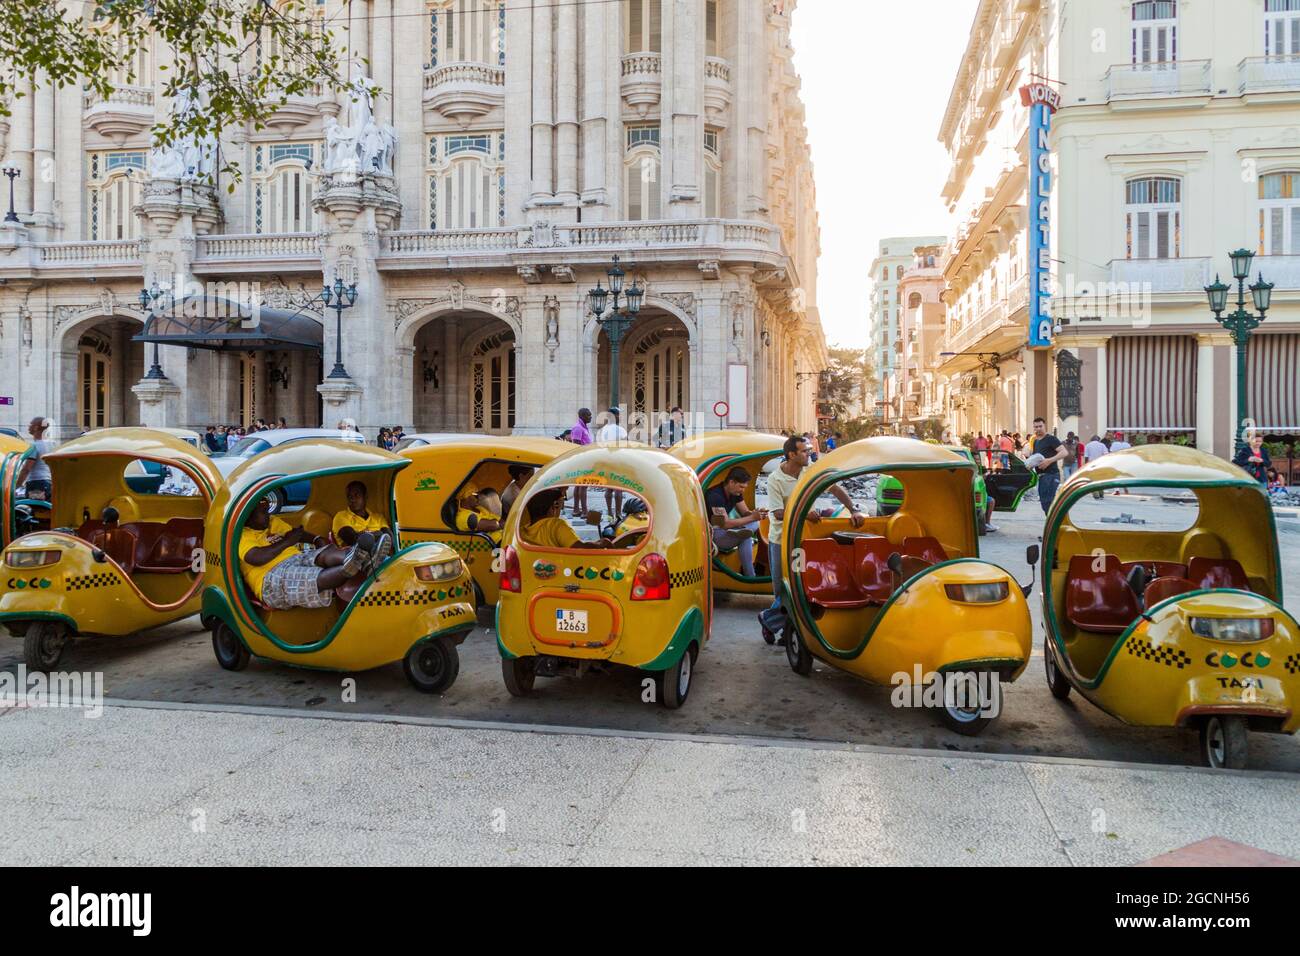 HAVANA, CUBA - FEB 21, 2016: Row of coco taxis in the center of Havana. Stock Photo